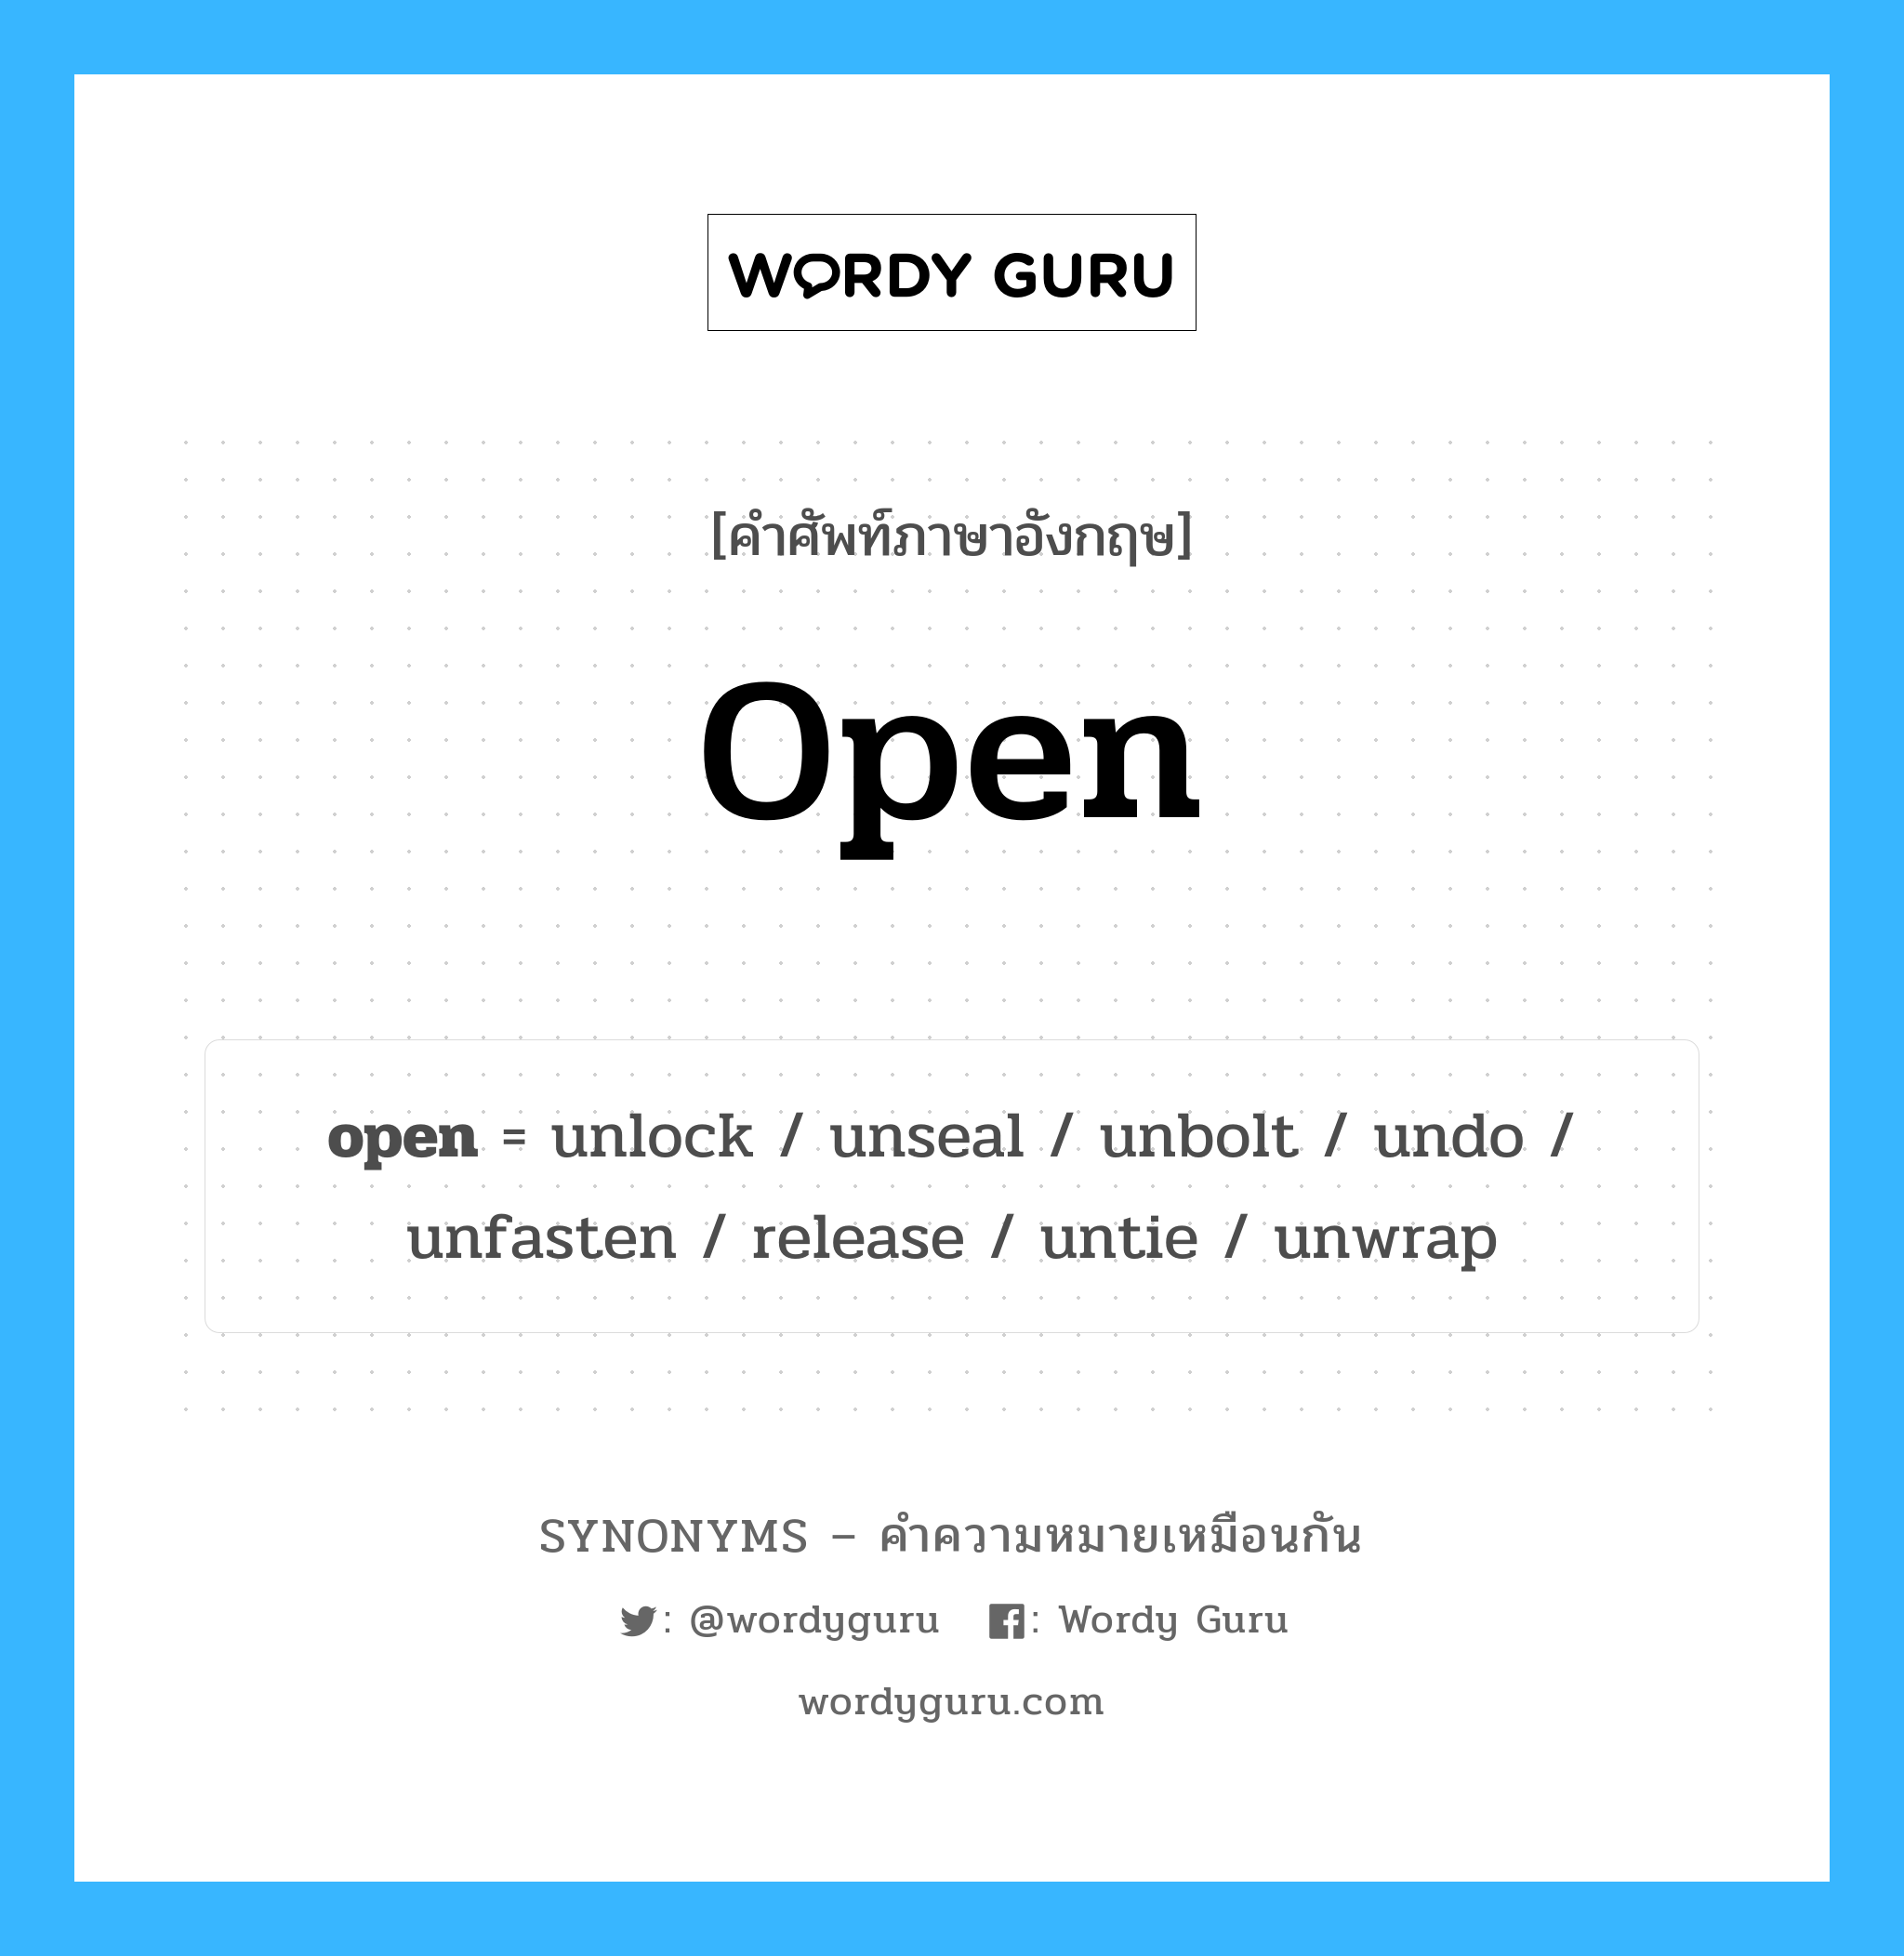 unseal เป็นหนึ่งใน open และมีคำอื่น ๆ อีกดังนี้, คำศัพท์ภาษาอังกฤษ unseal ความหมายคล้ายกันกับ open แปลว่า ลับ ๆ หมวด open